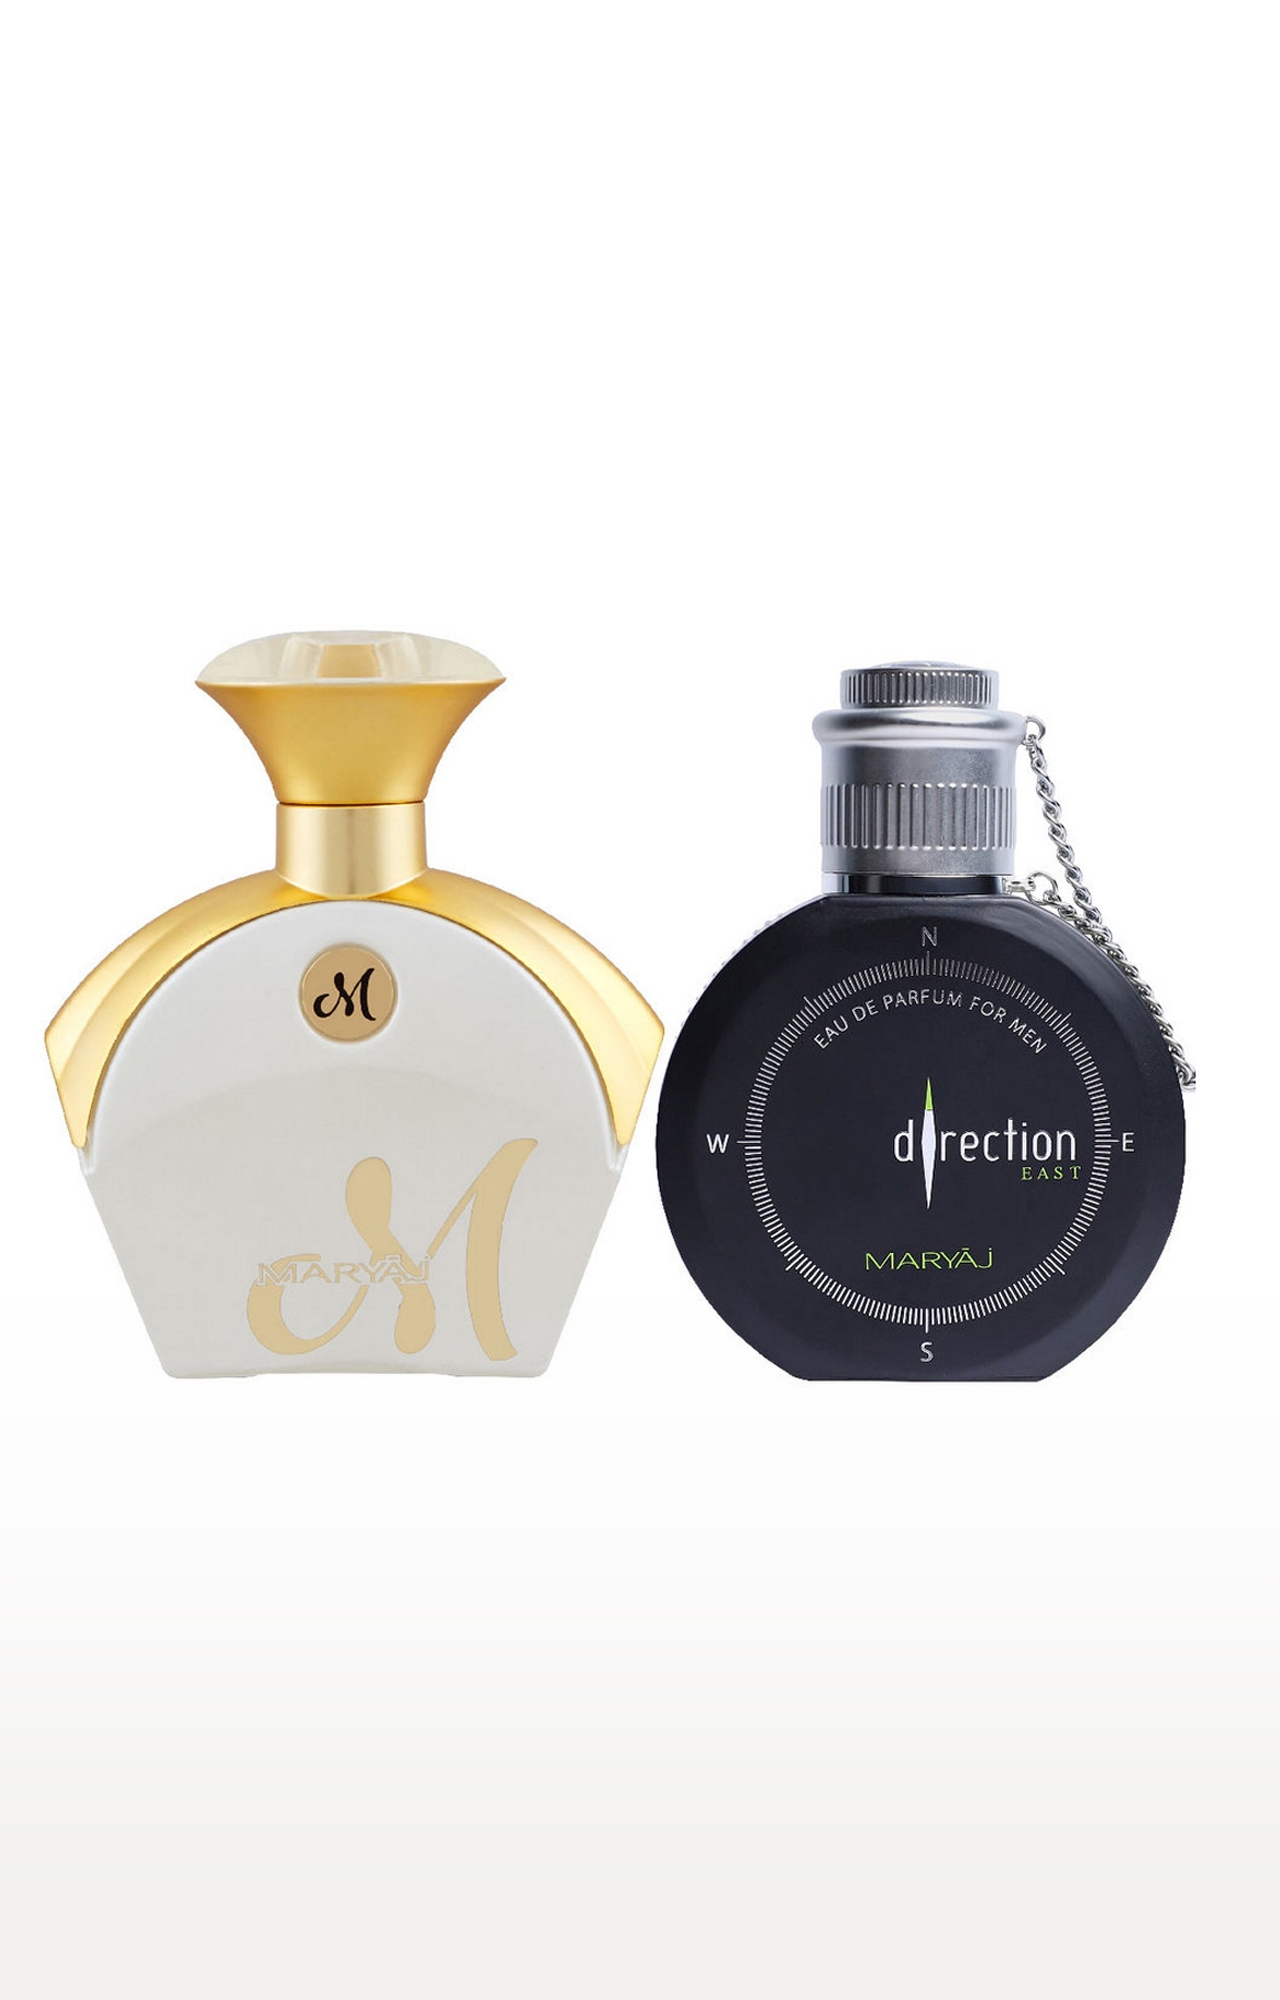 Maryaj M White for Her Eau De Parfum Fruity Perfume 90ml for Women and Maryaj Direction East Eau De Parfum Perfume 100ml for Men